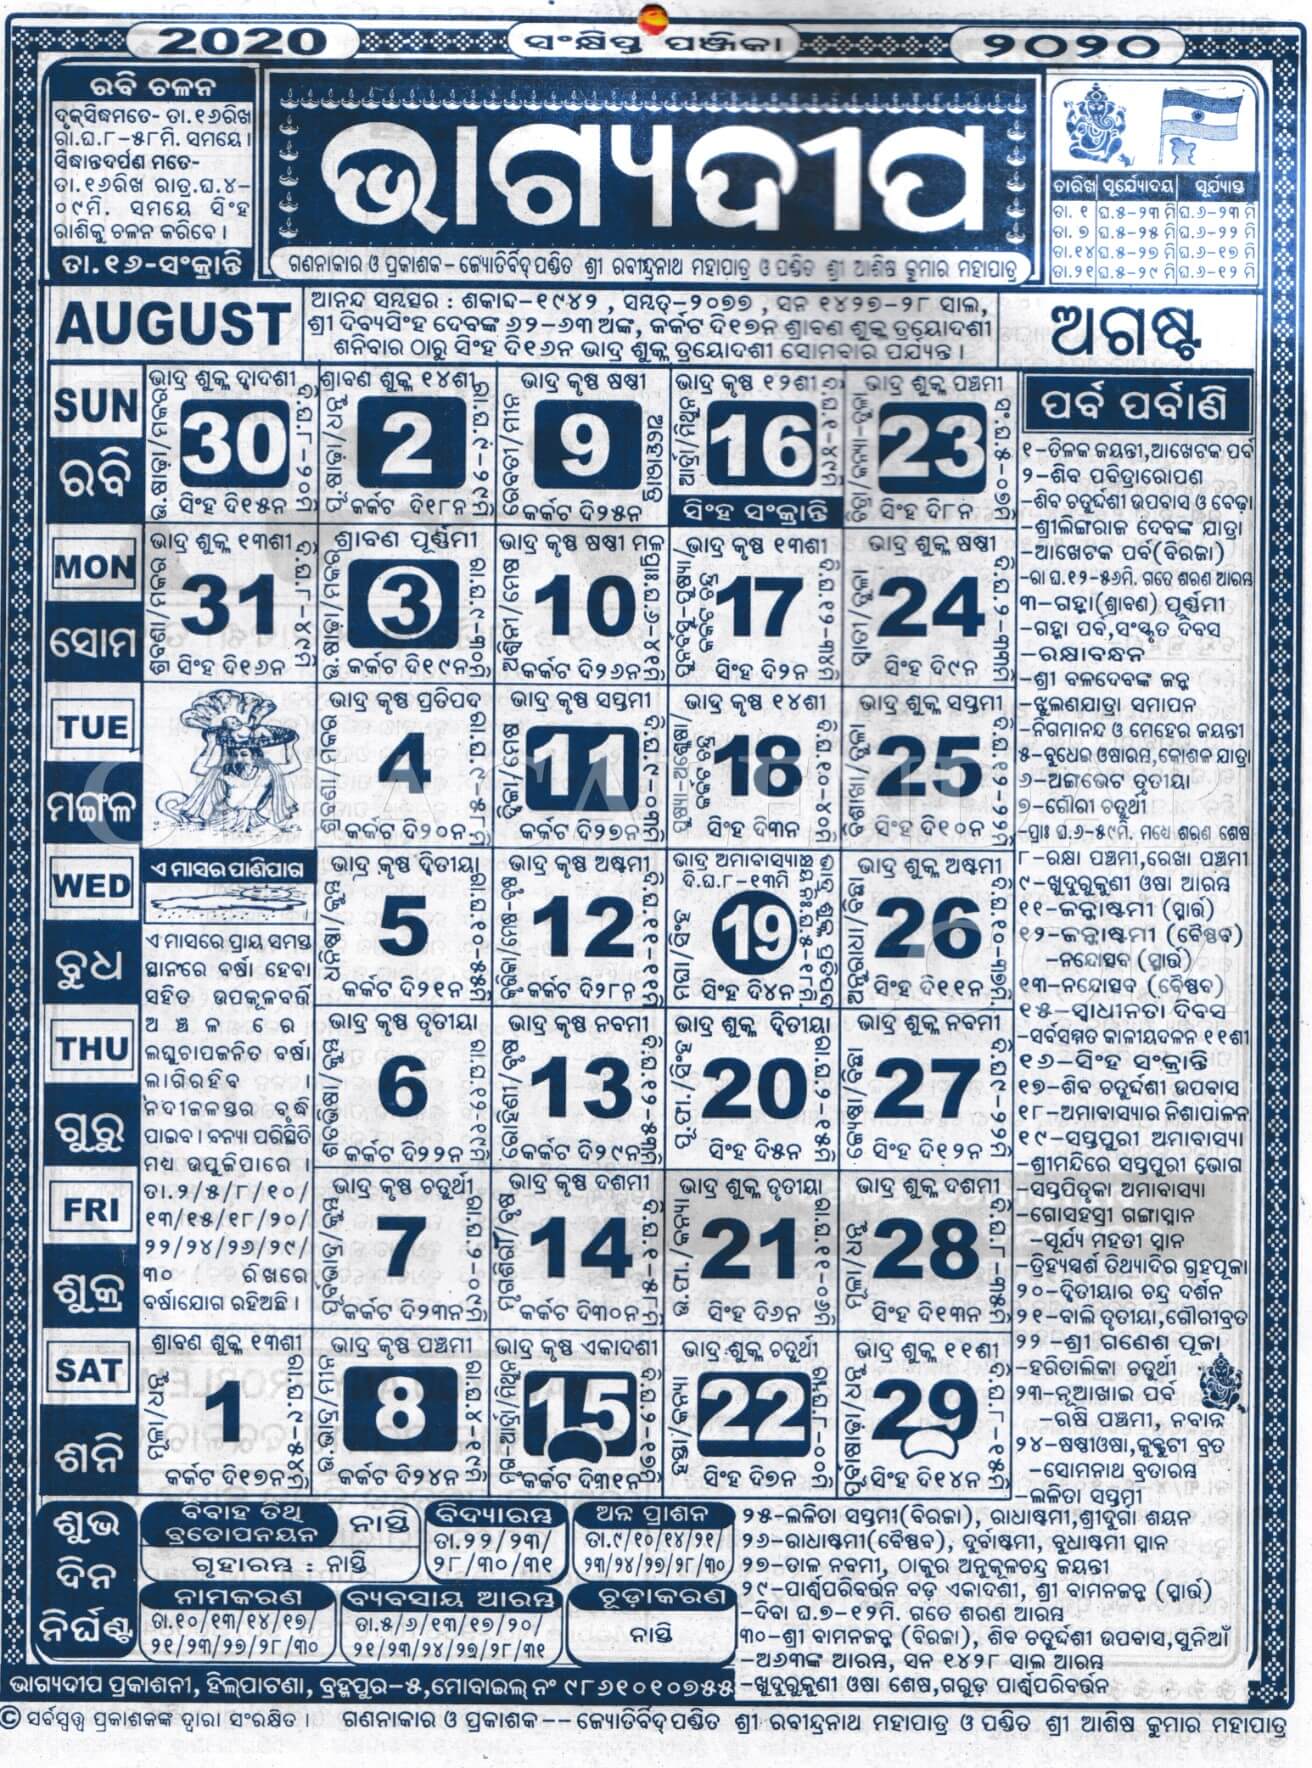 Bhagyadeep Calendar 2020 August